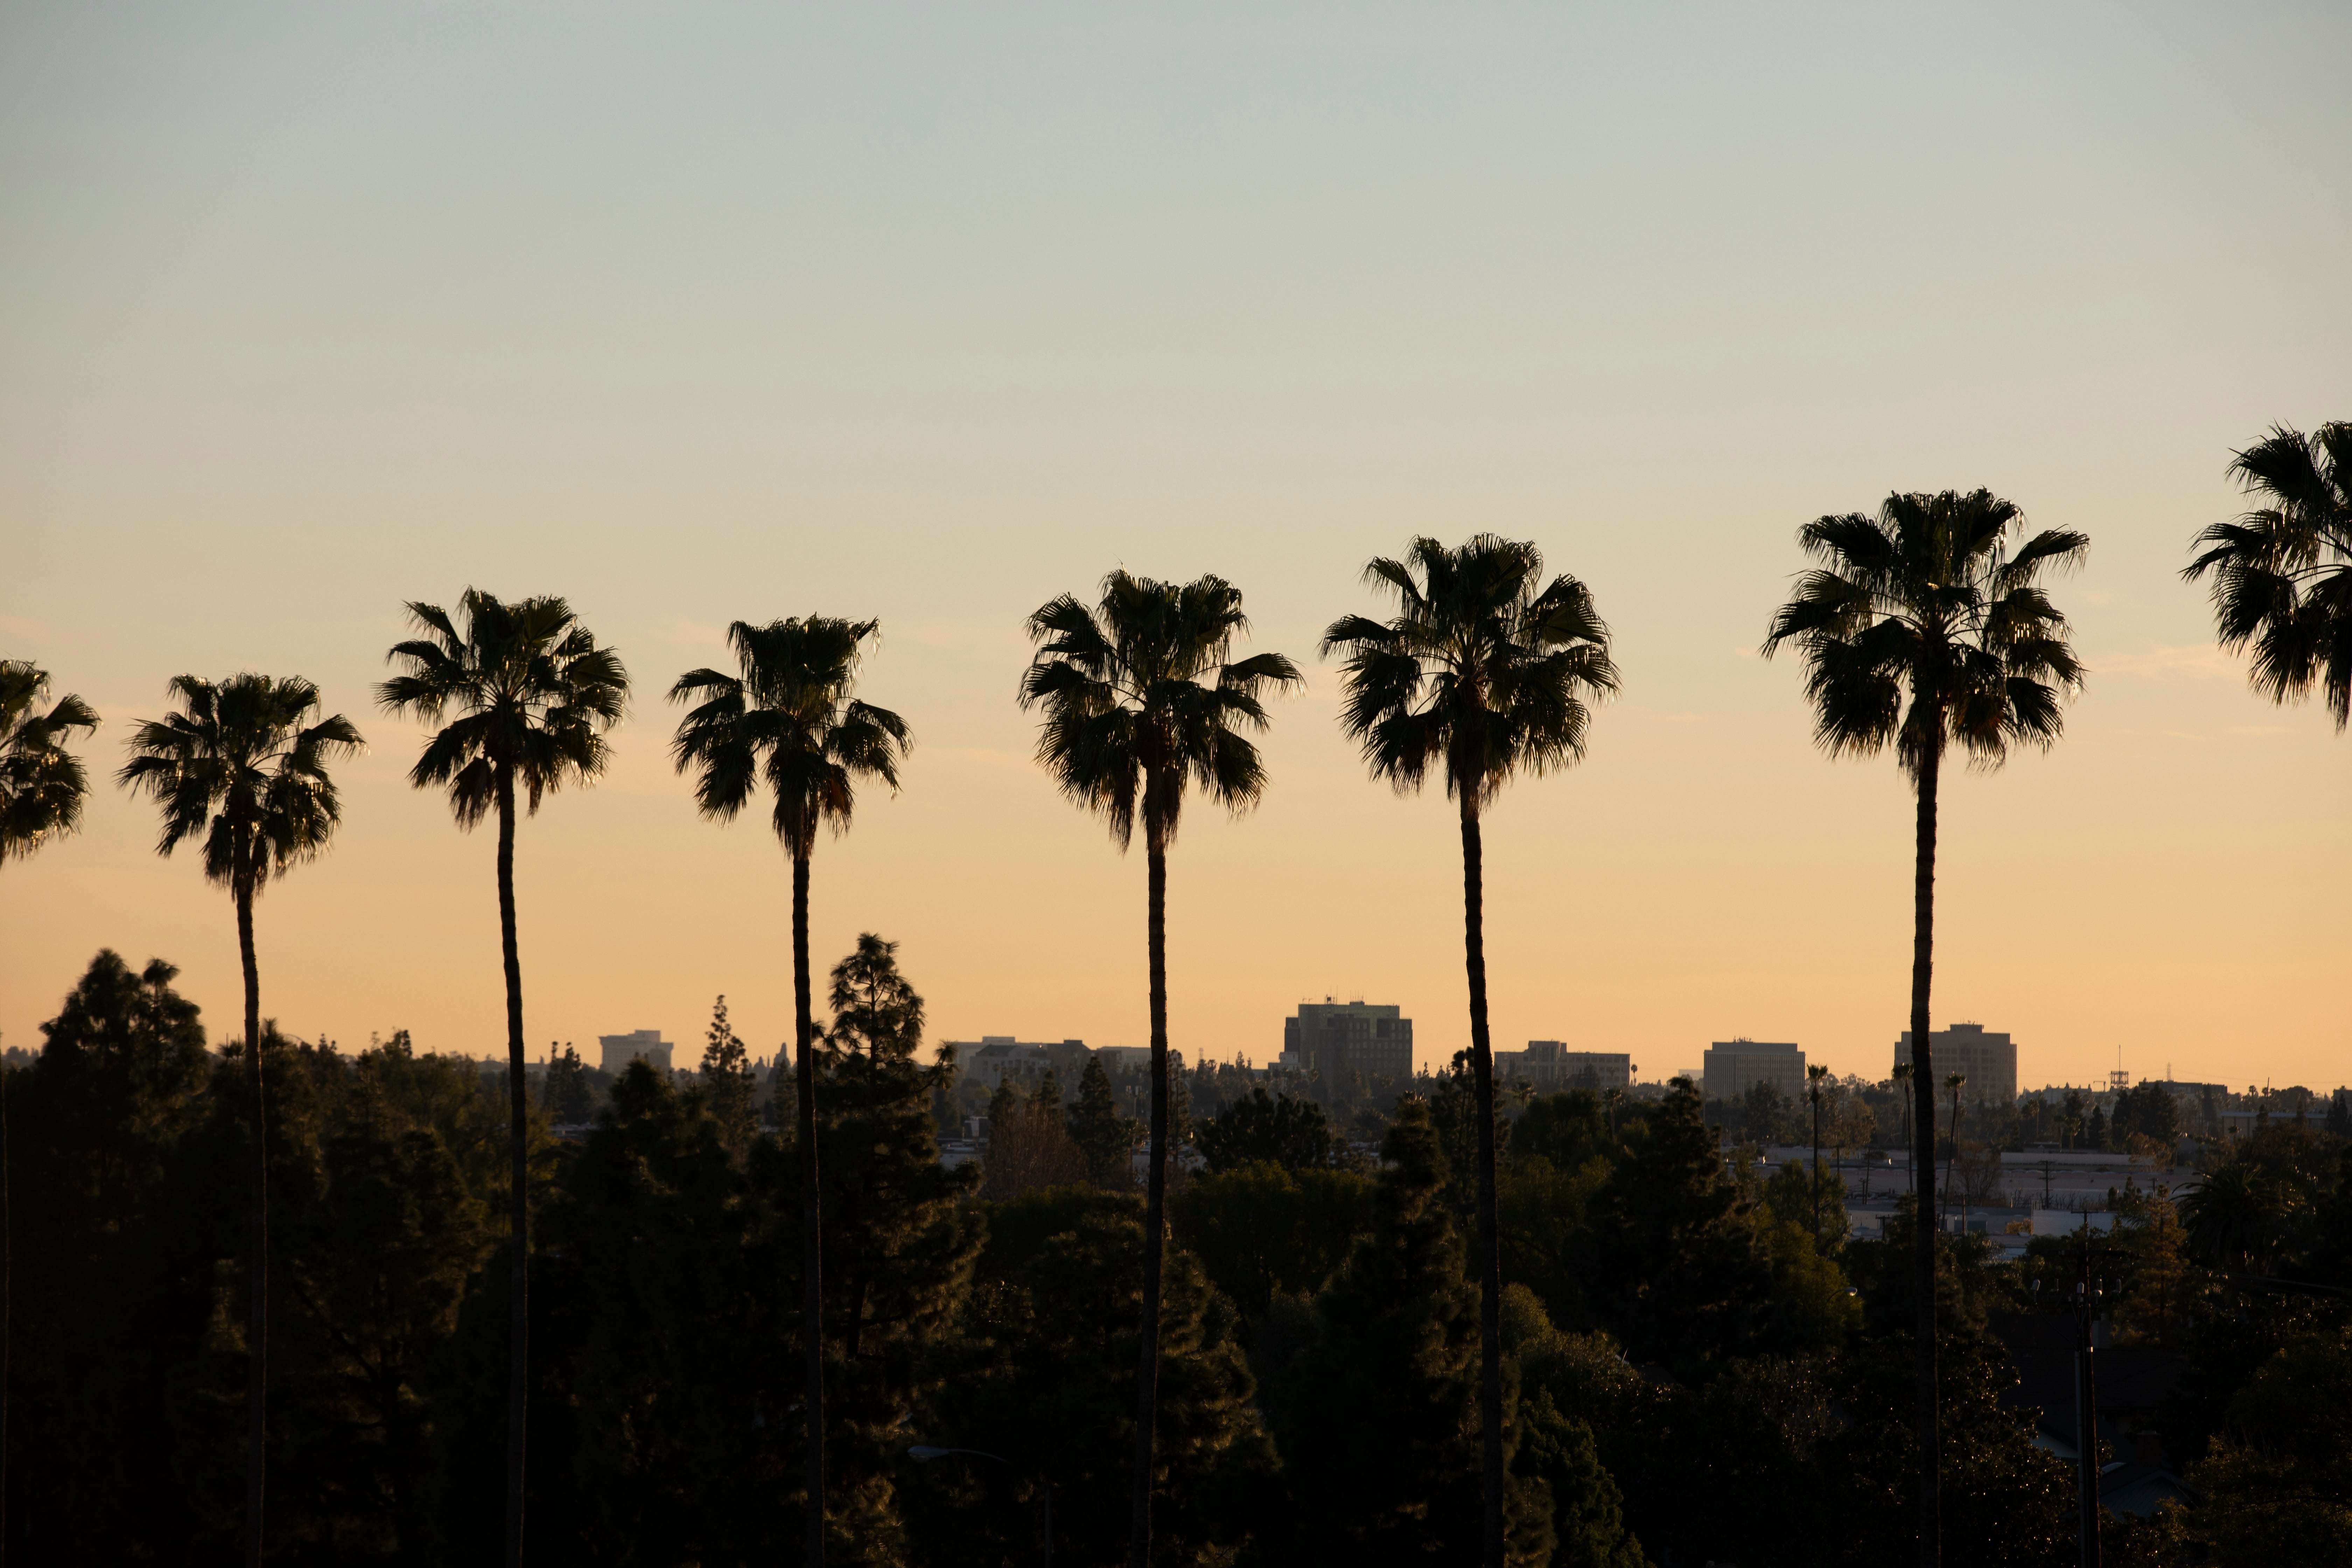 Sunset over Anaheim, CA skyline with palm trees